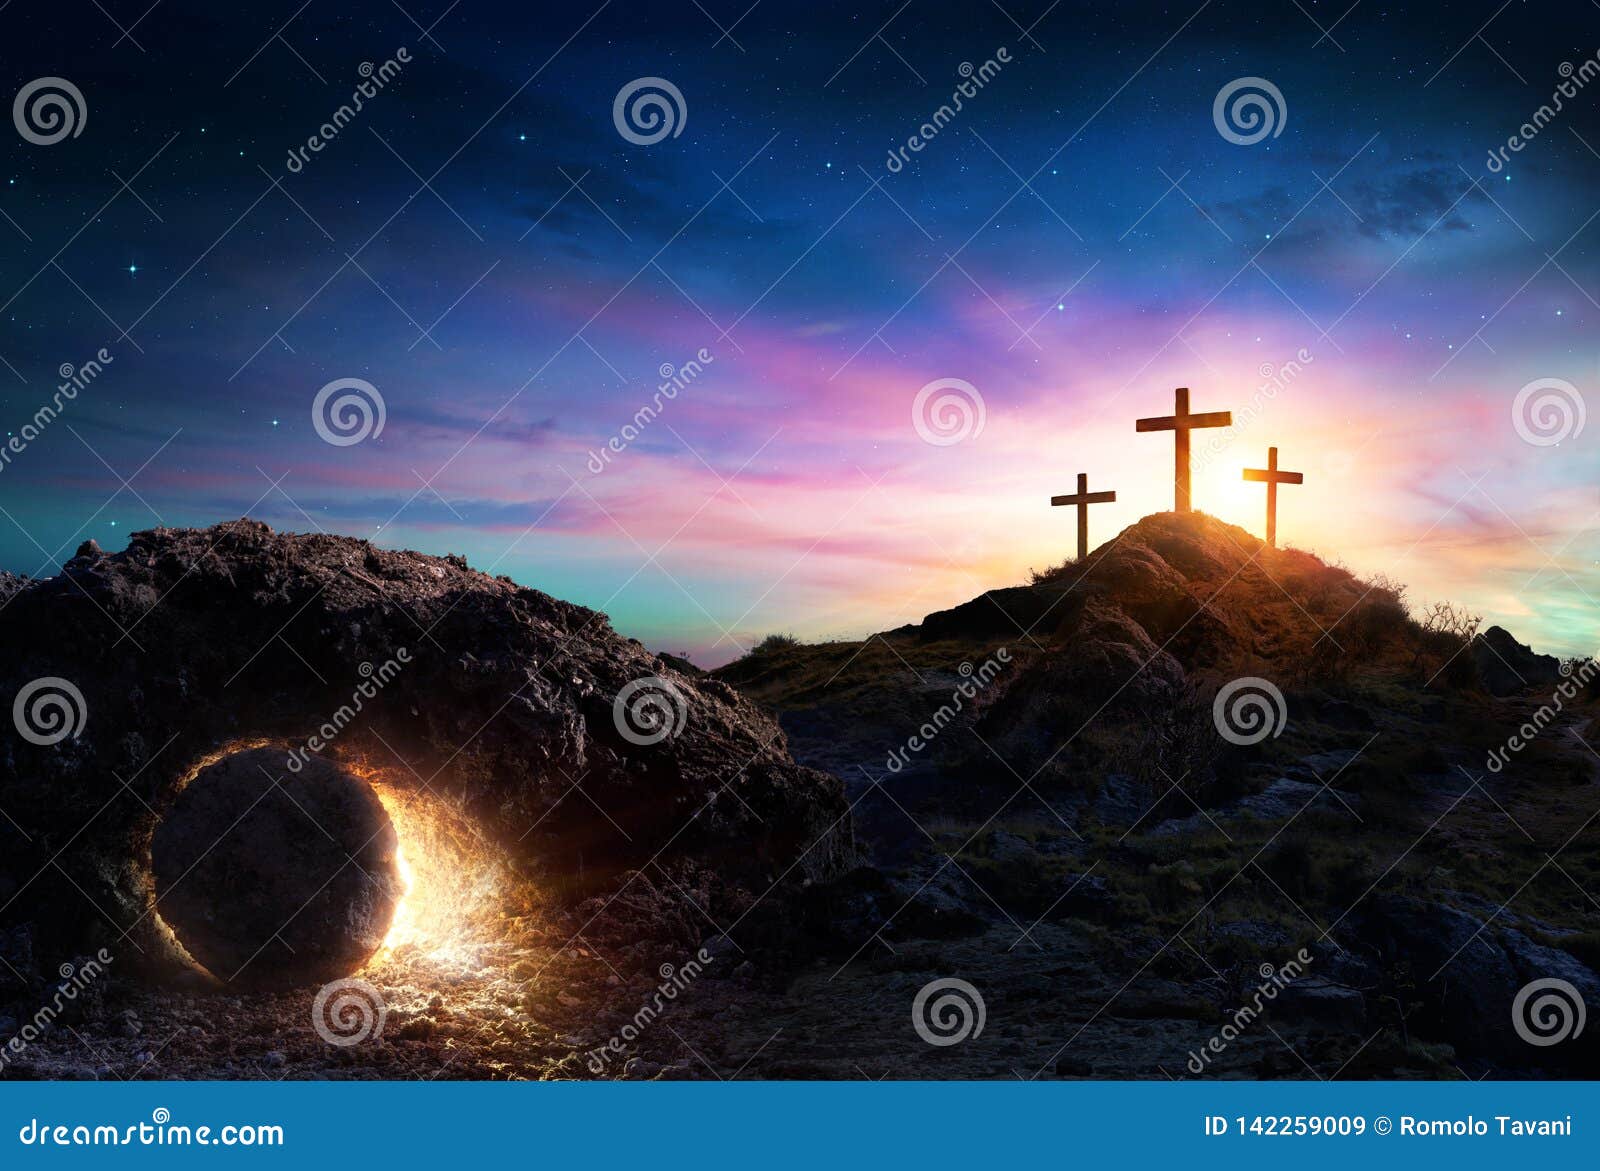 resurrection - tomb empty with crucifixion